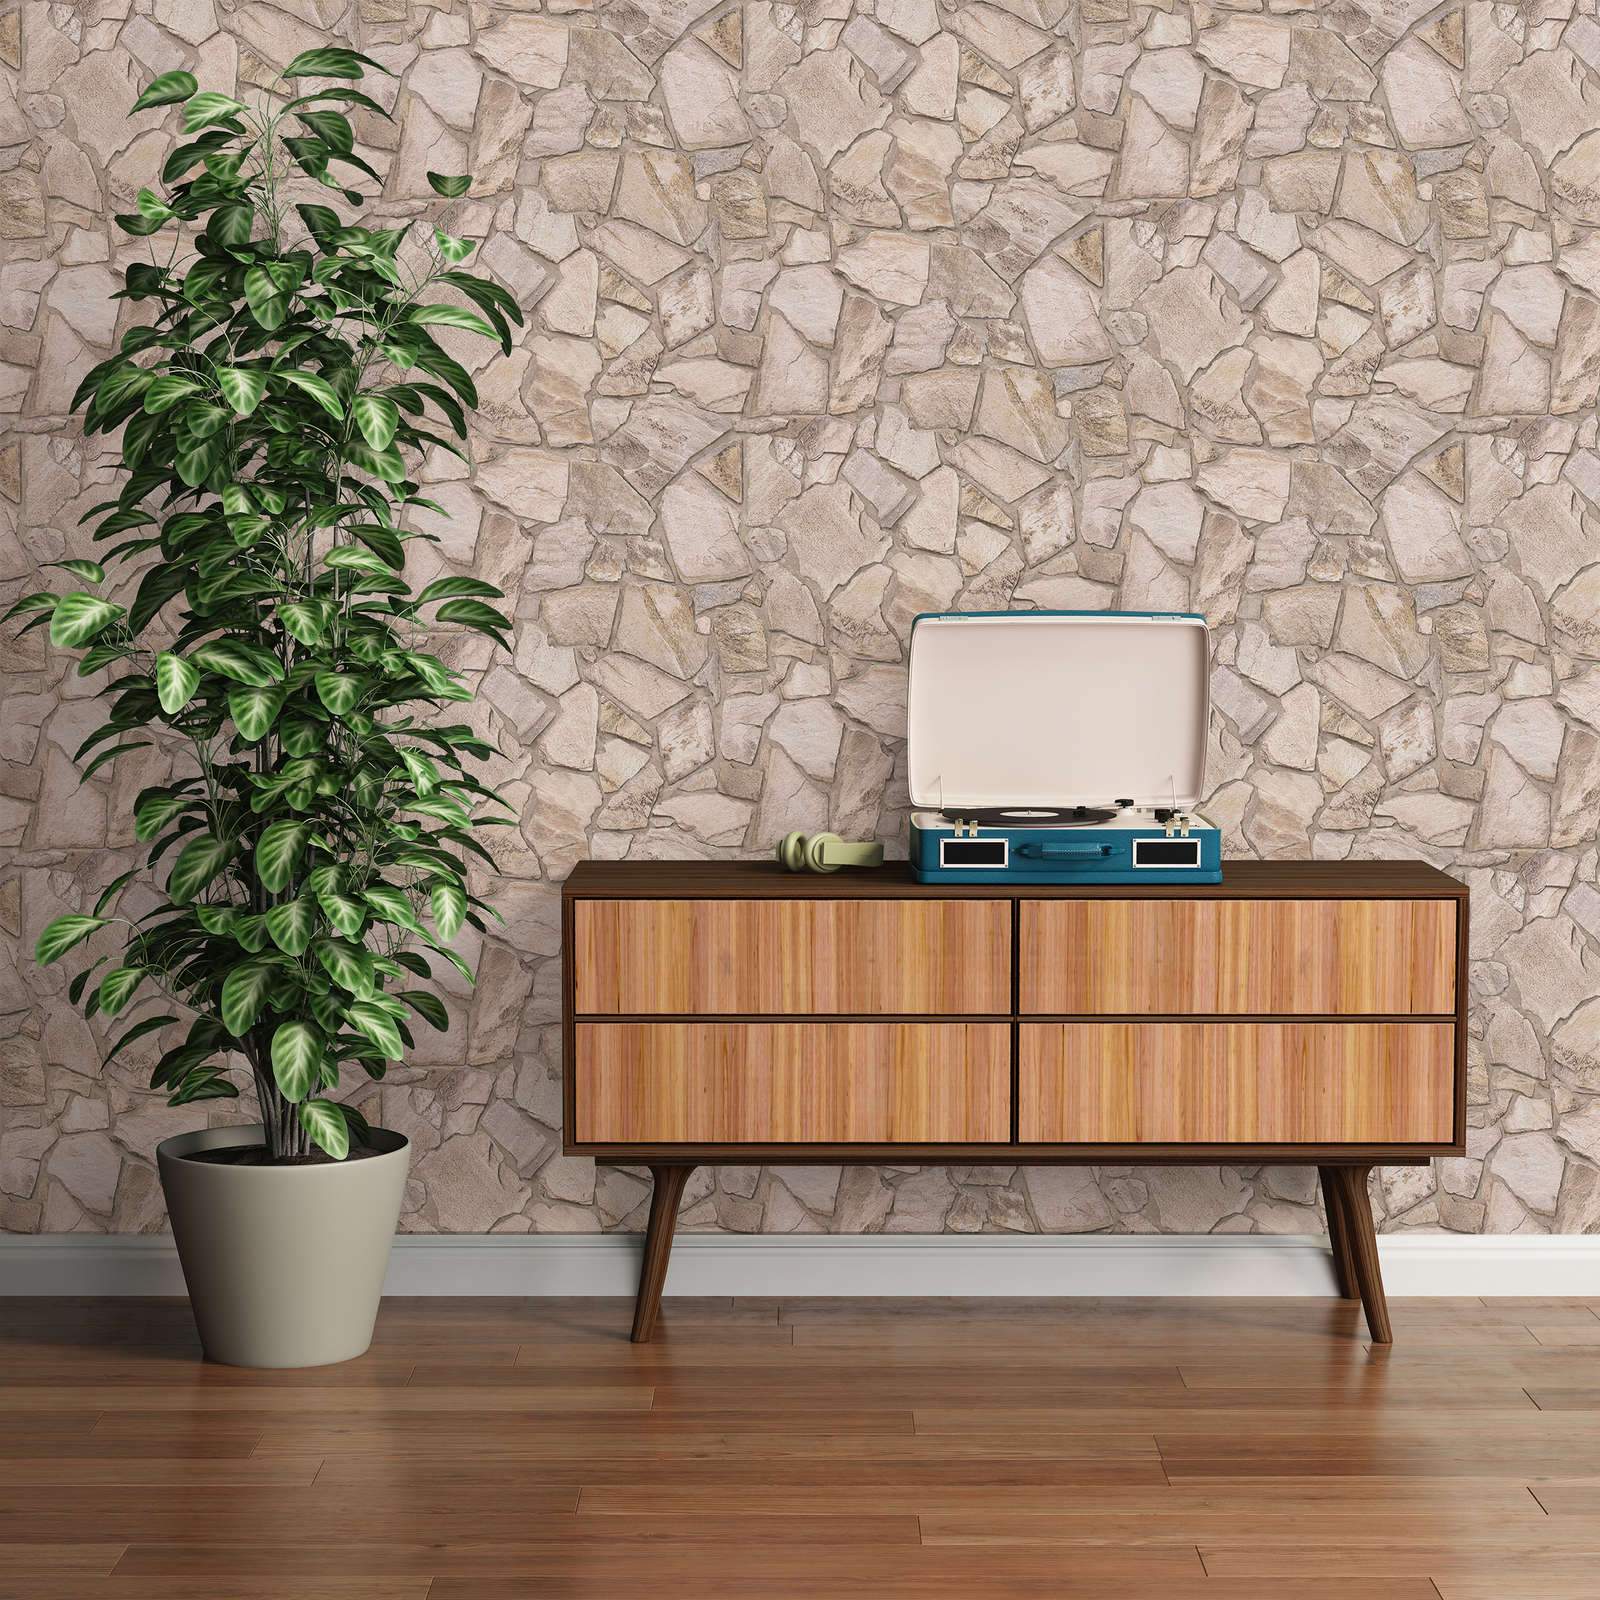             Non-woven wallpaper in stone look with 3D brickwork - beige, grey, brown
        